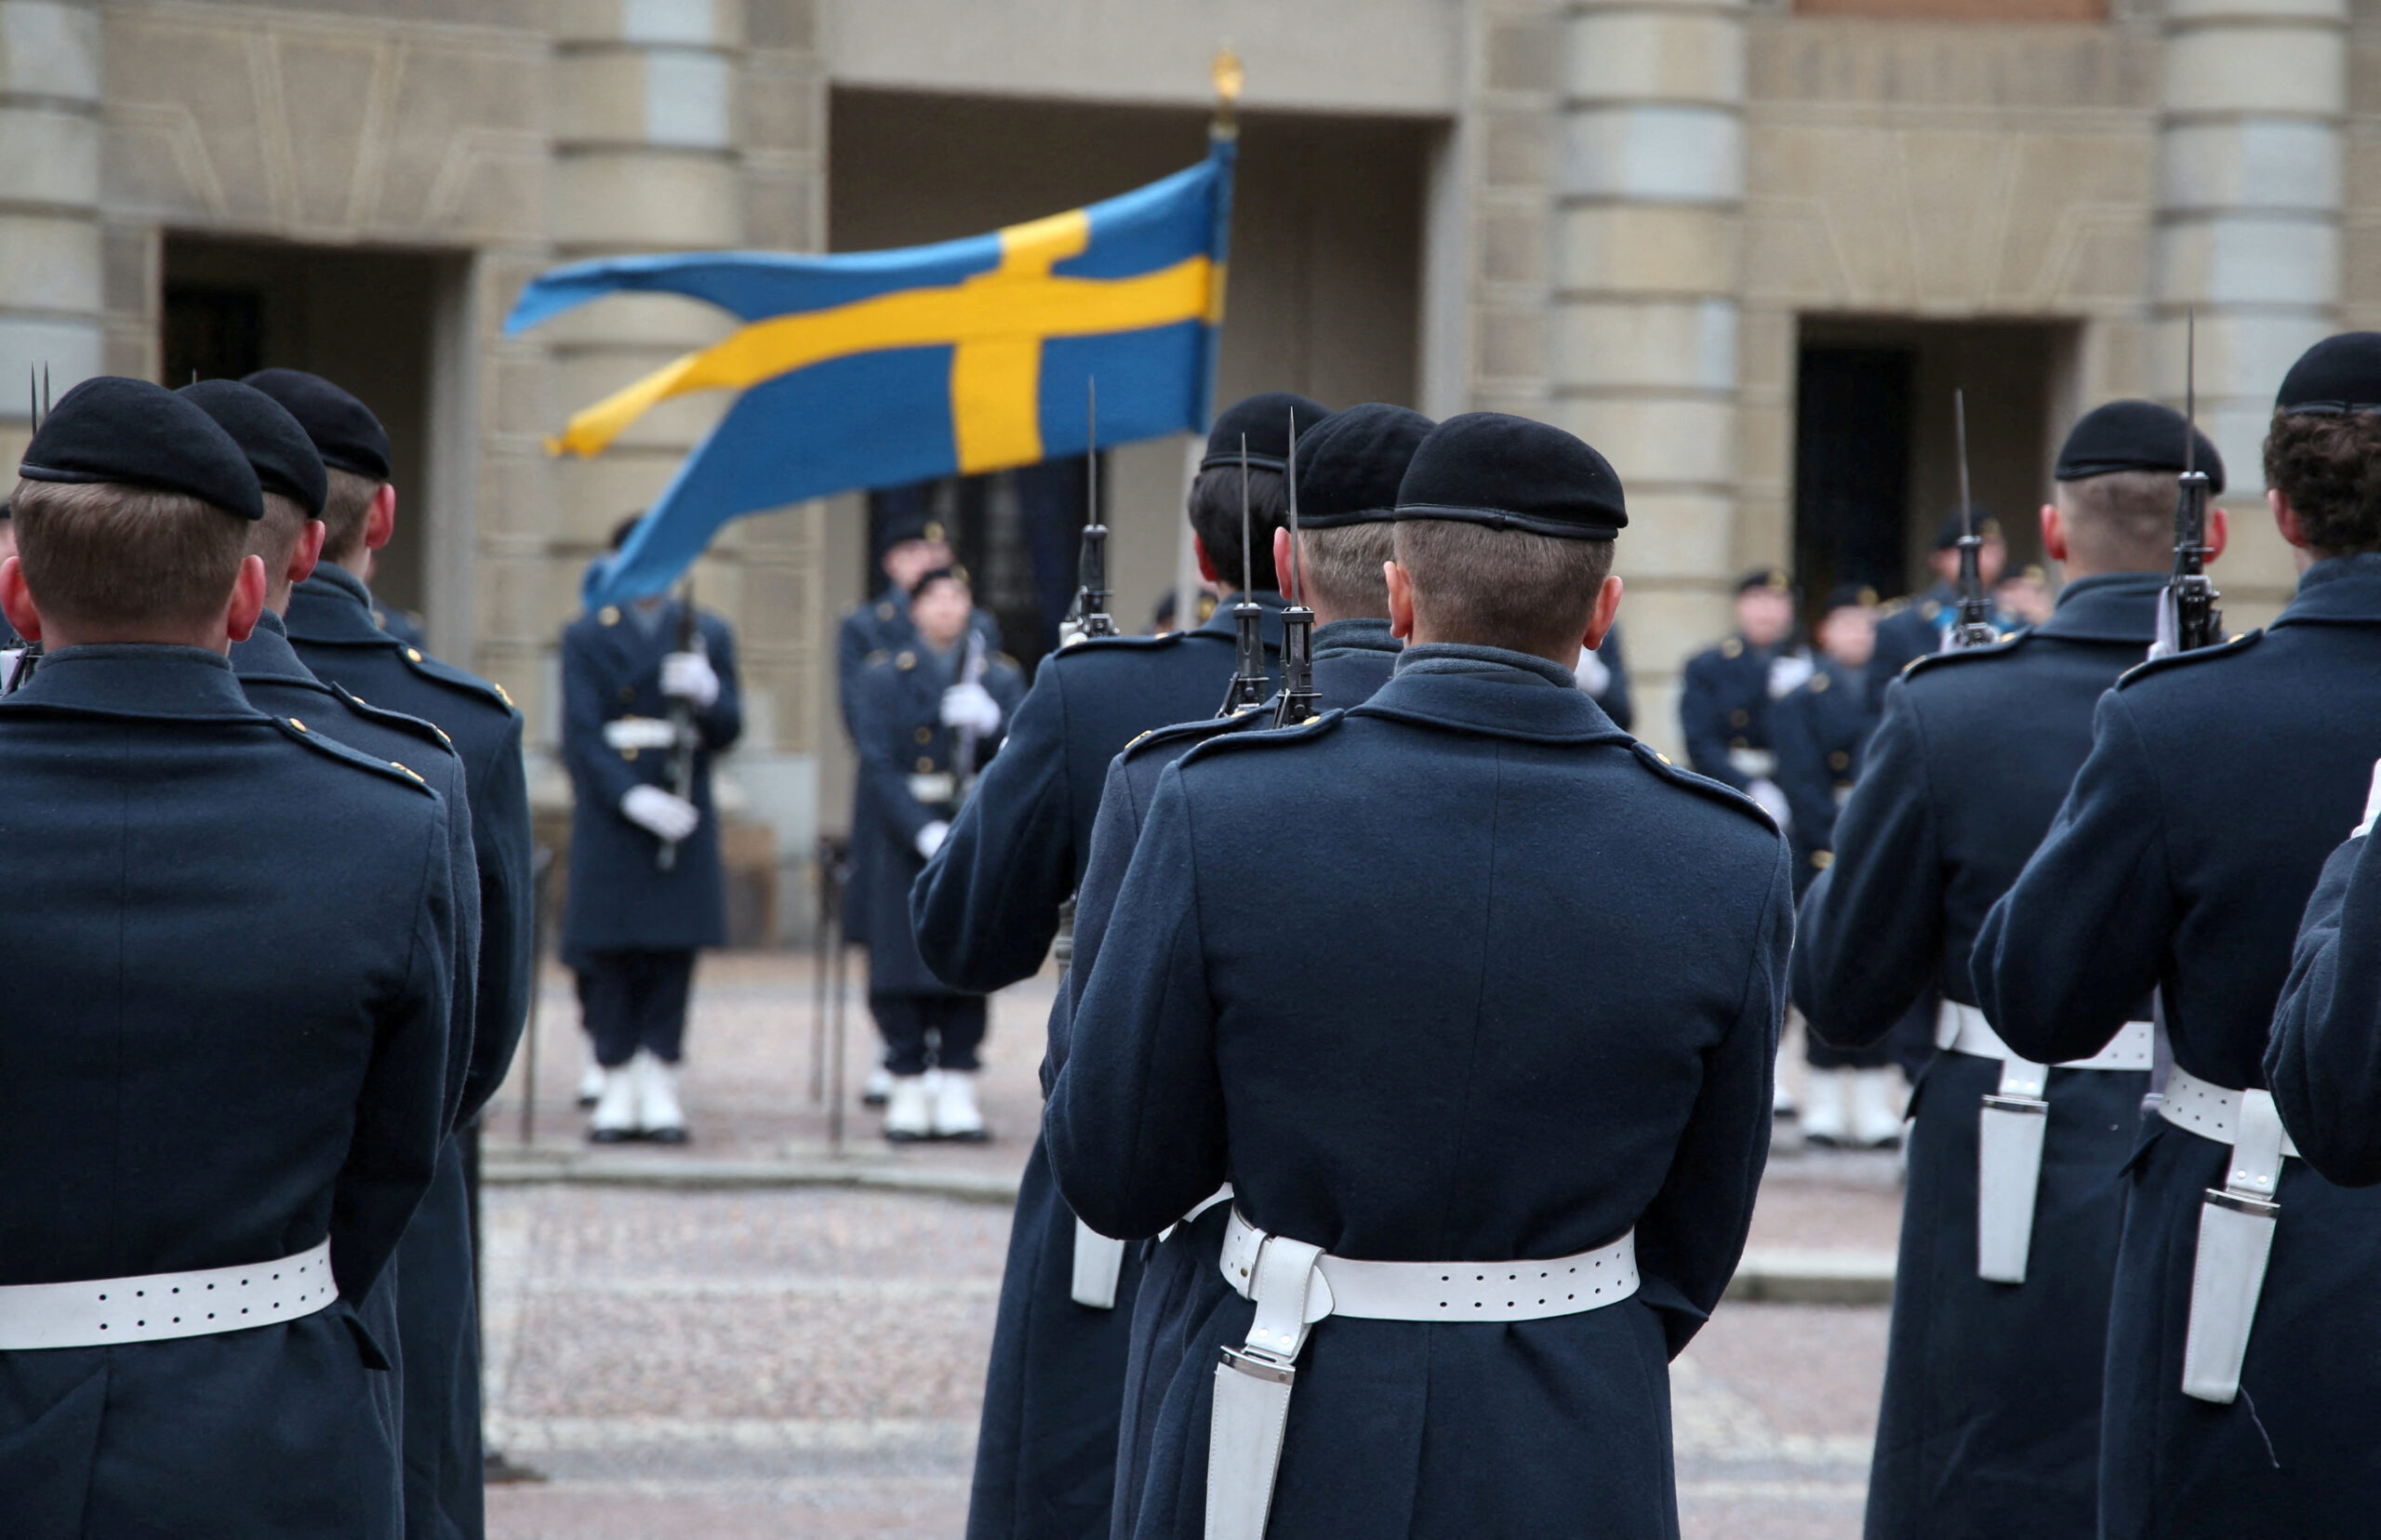 2024 02 26T163742Z 1 LYNXNPEK1P0IW RTROPTP 4 NATO NORDICS SWEDEN SECURITY scaled